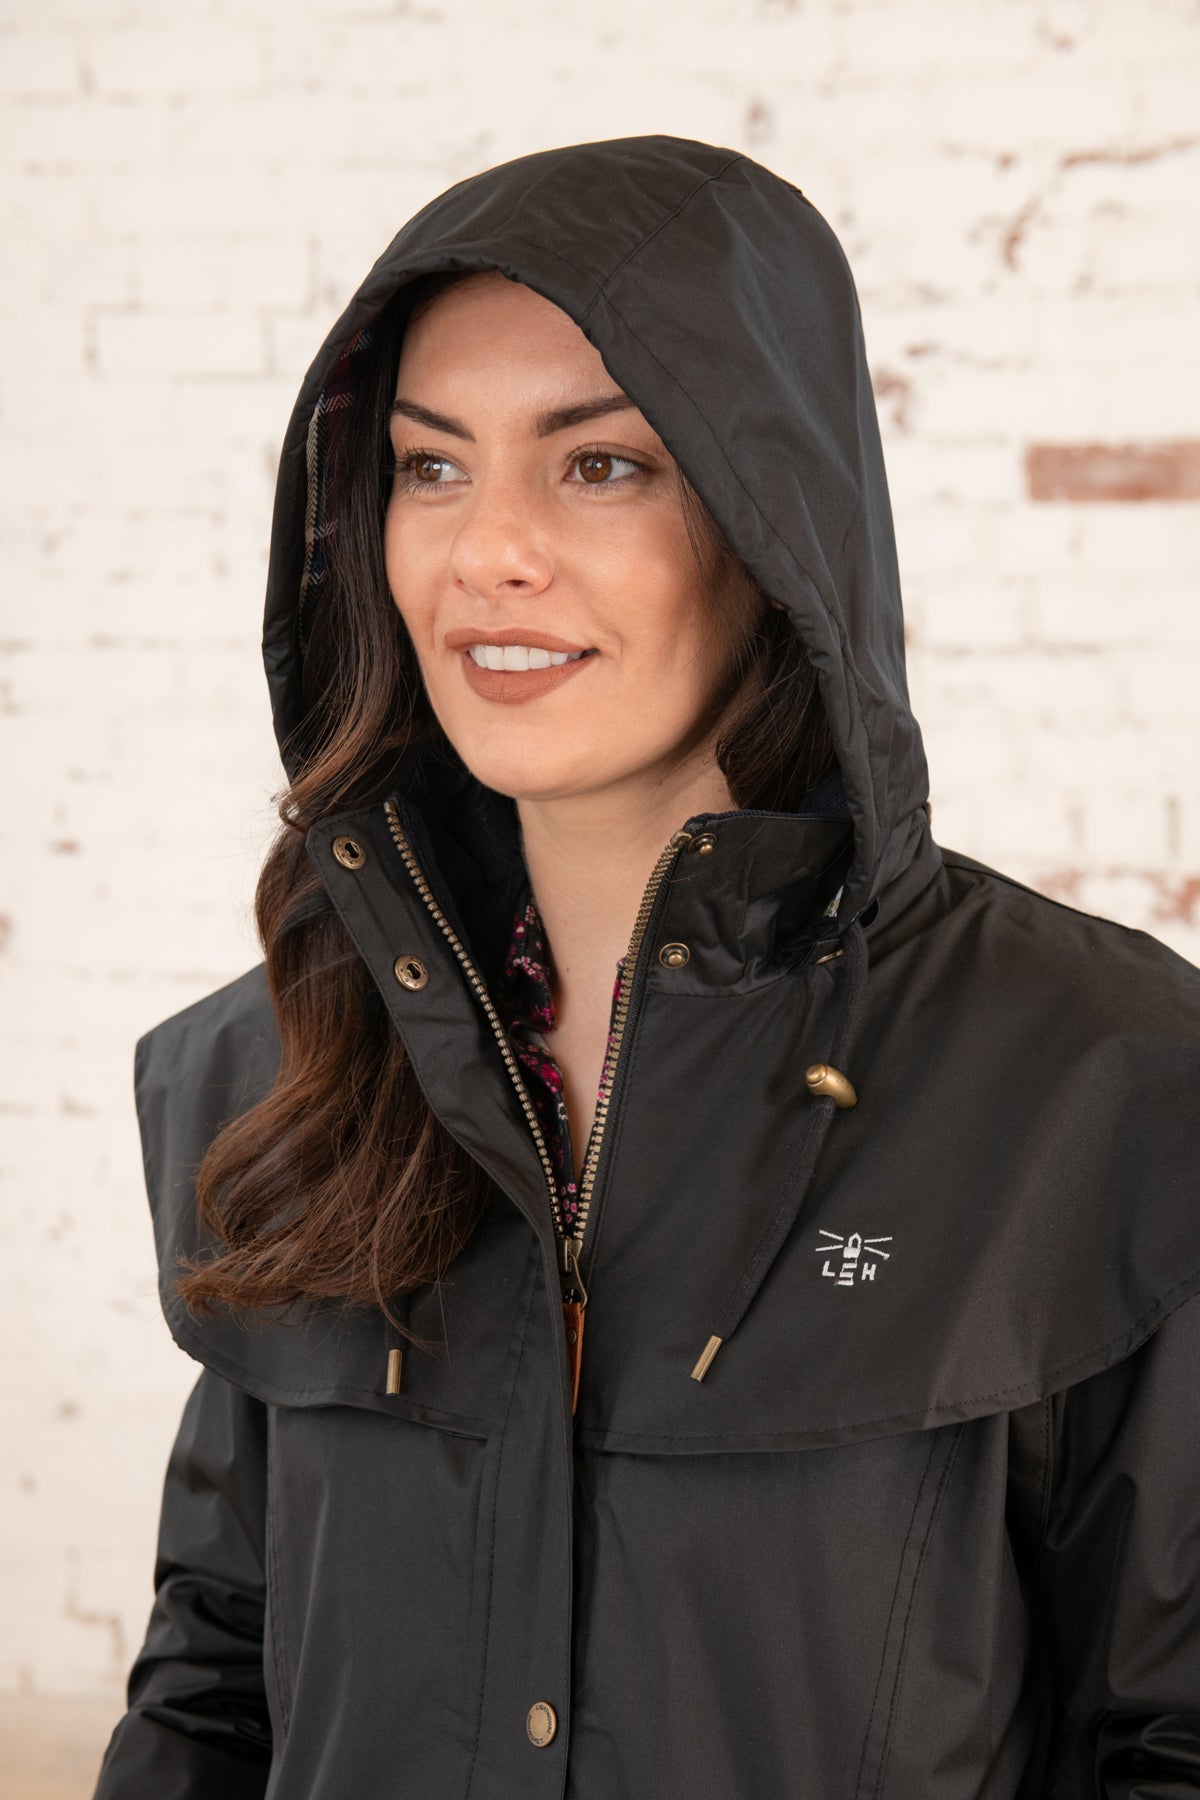 Eddie Bauer Jackets: Women's Waterproof EB551 BLK Black Rain Jacket